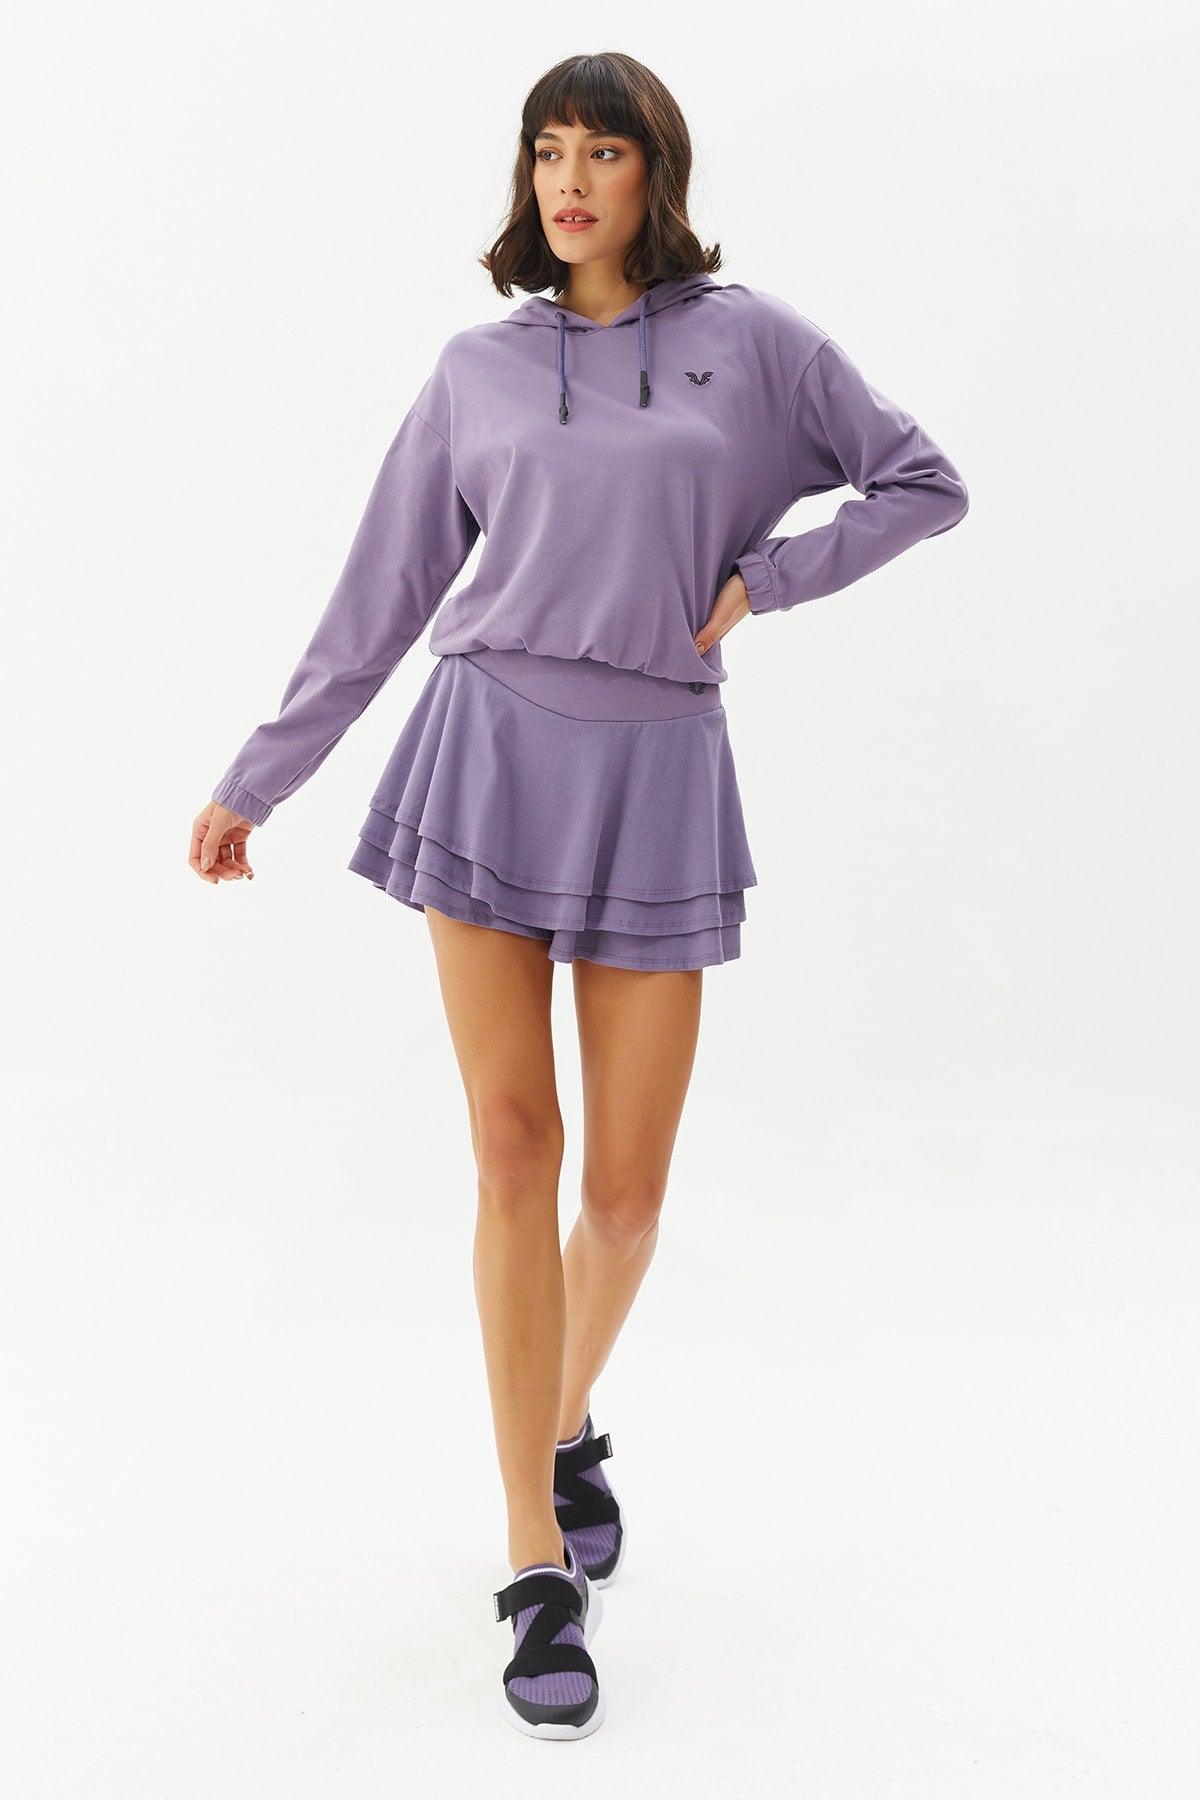 Women's Purple High Waist Sports And Casual Summer Solid Color Short Mini Skirt Cotton Shorts Tennis Skirt 0110 - Swordslife